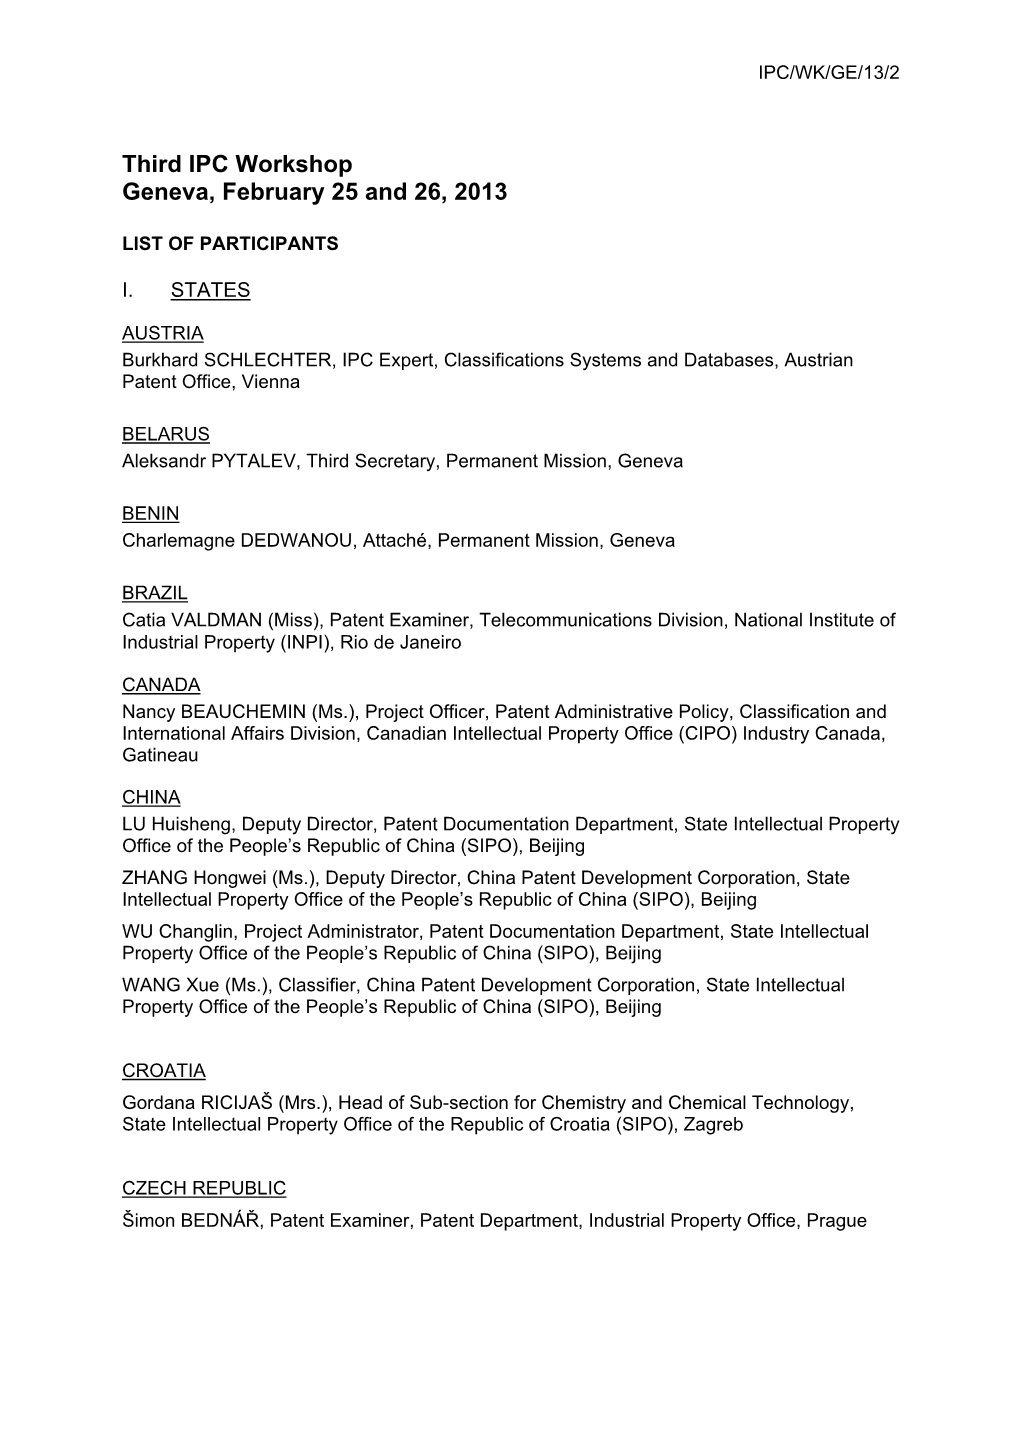 Document IPC/WK/GE/13/2, List of Participants, Third IPC Workshop